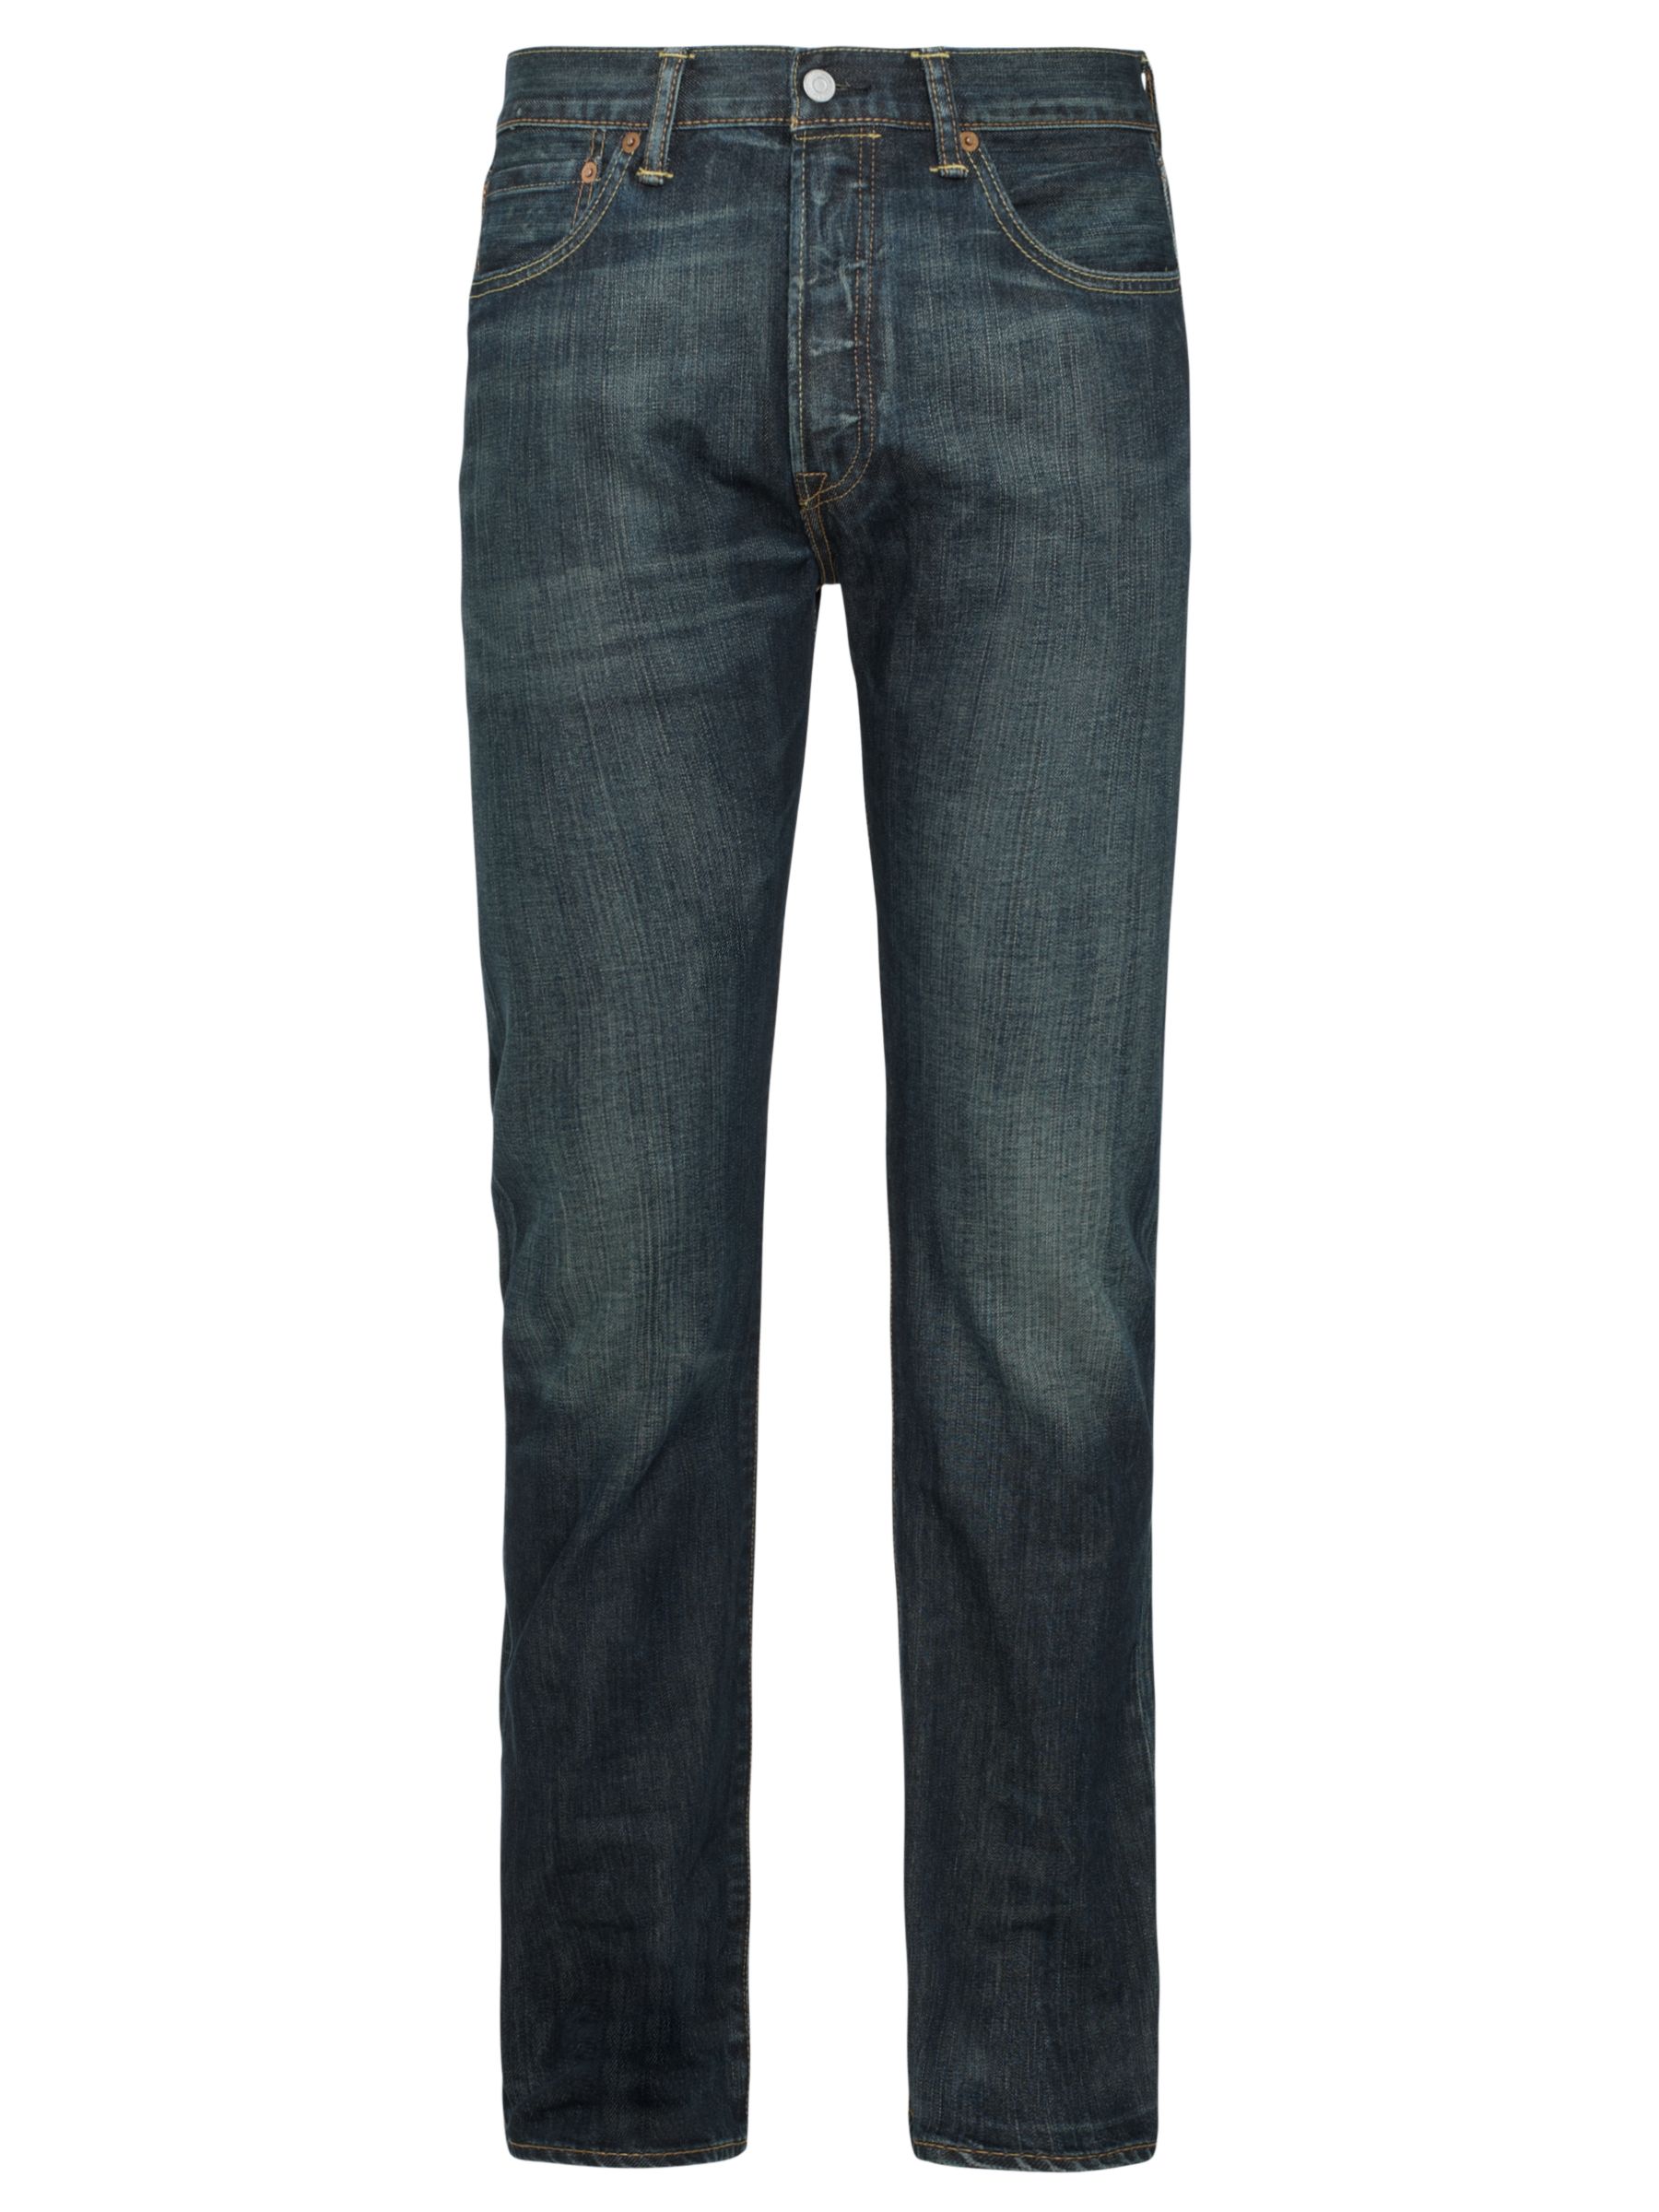 Levi’s 501 Original Straight Jeans, Dusty Black at John Lewis & Partners